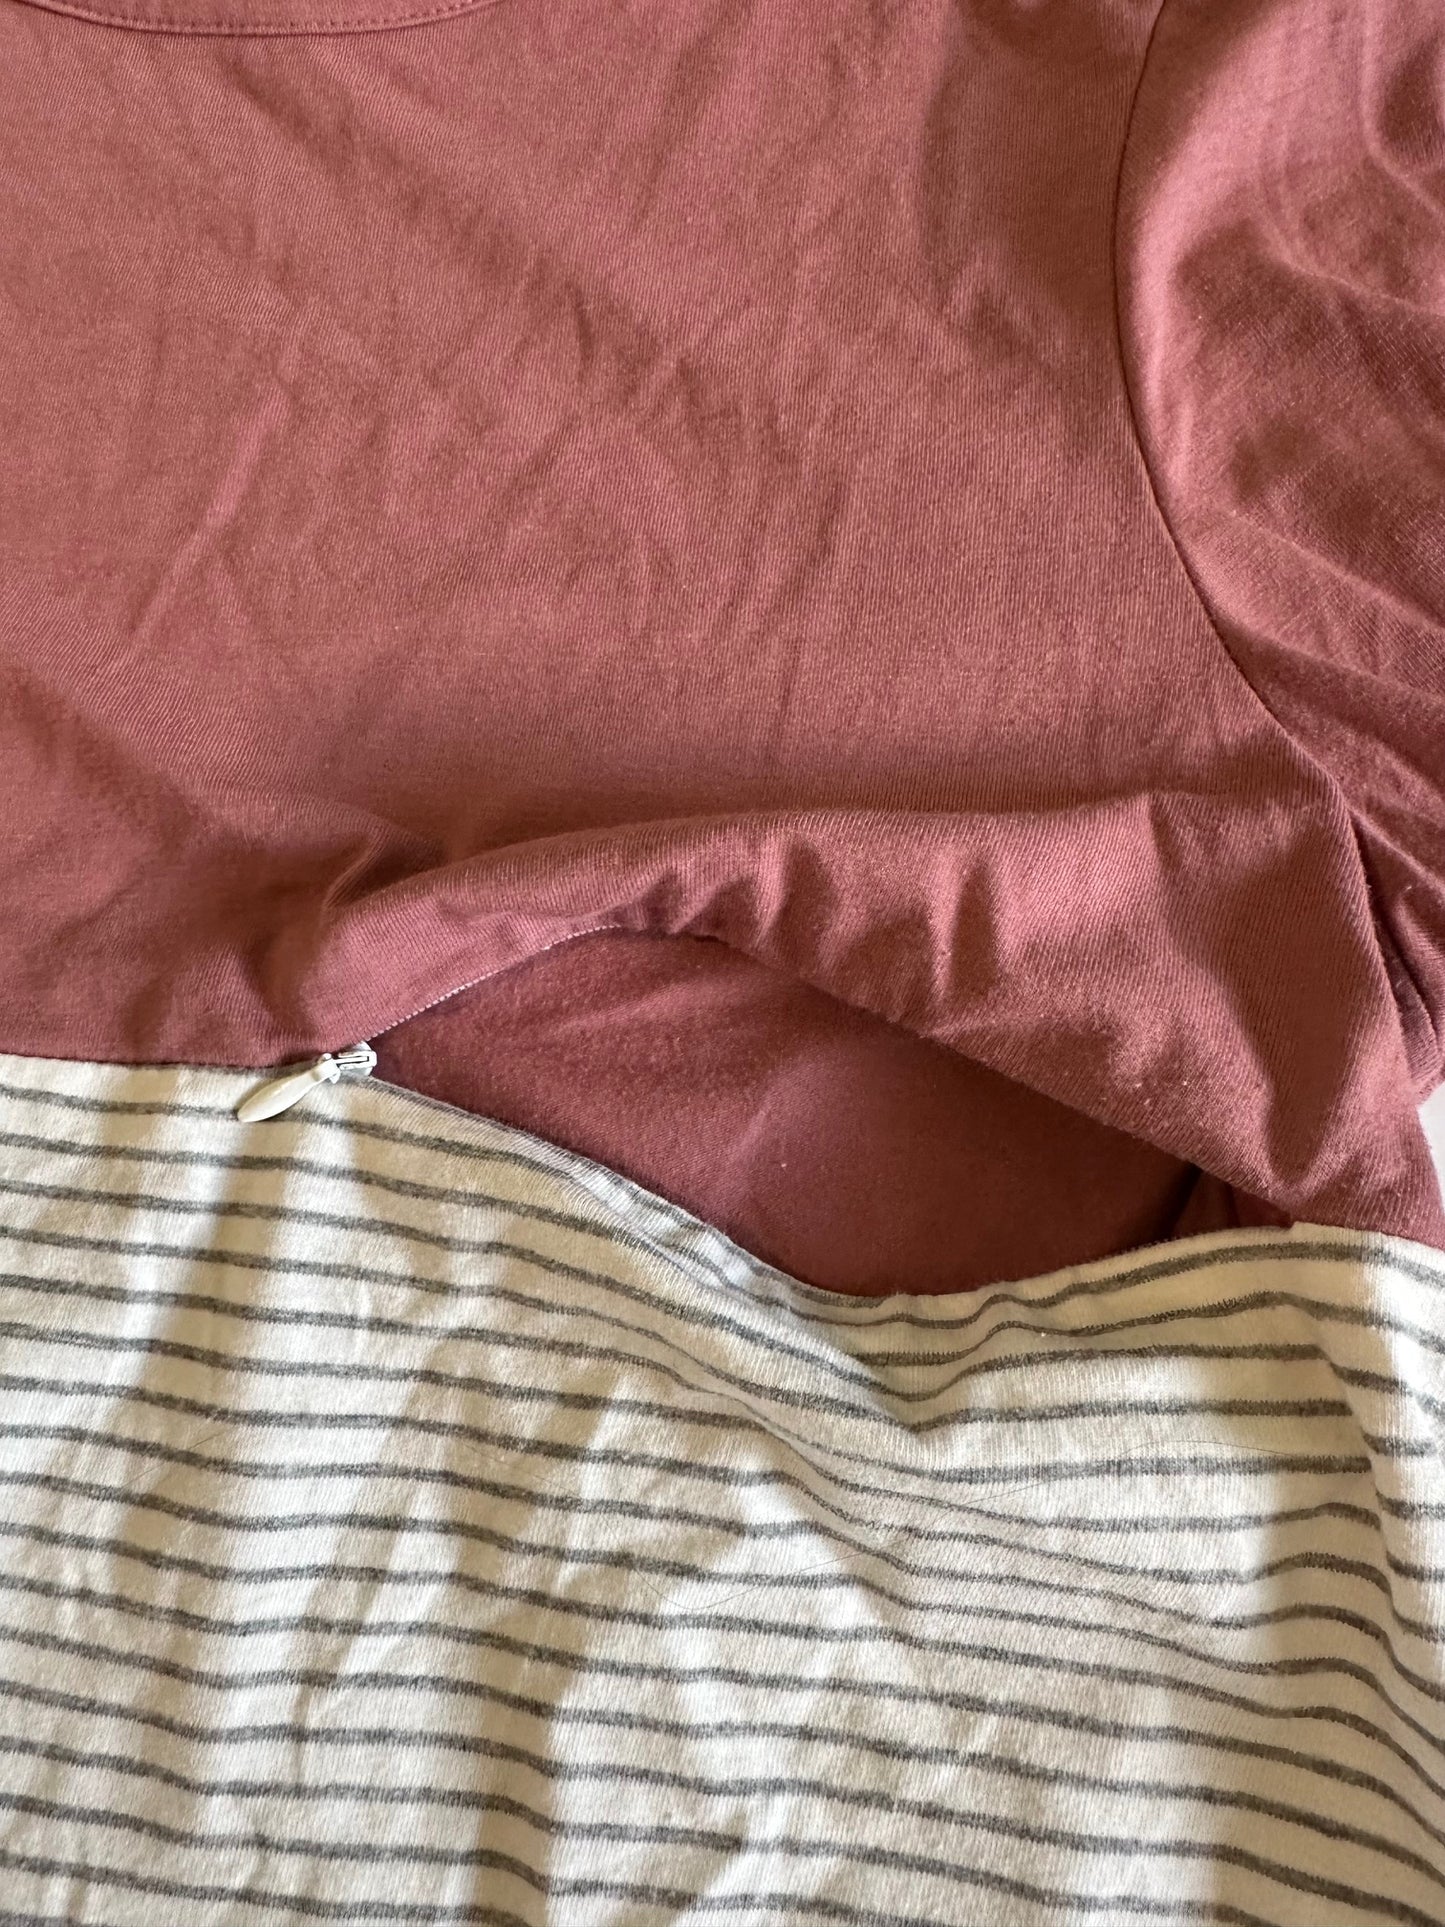 Shein, Dusty Rose, Striped, and Grey Nursing Shirt - Size Medium